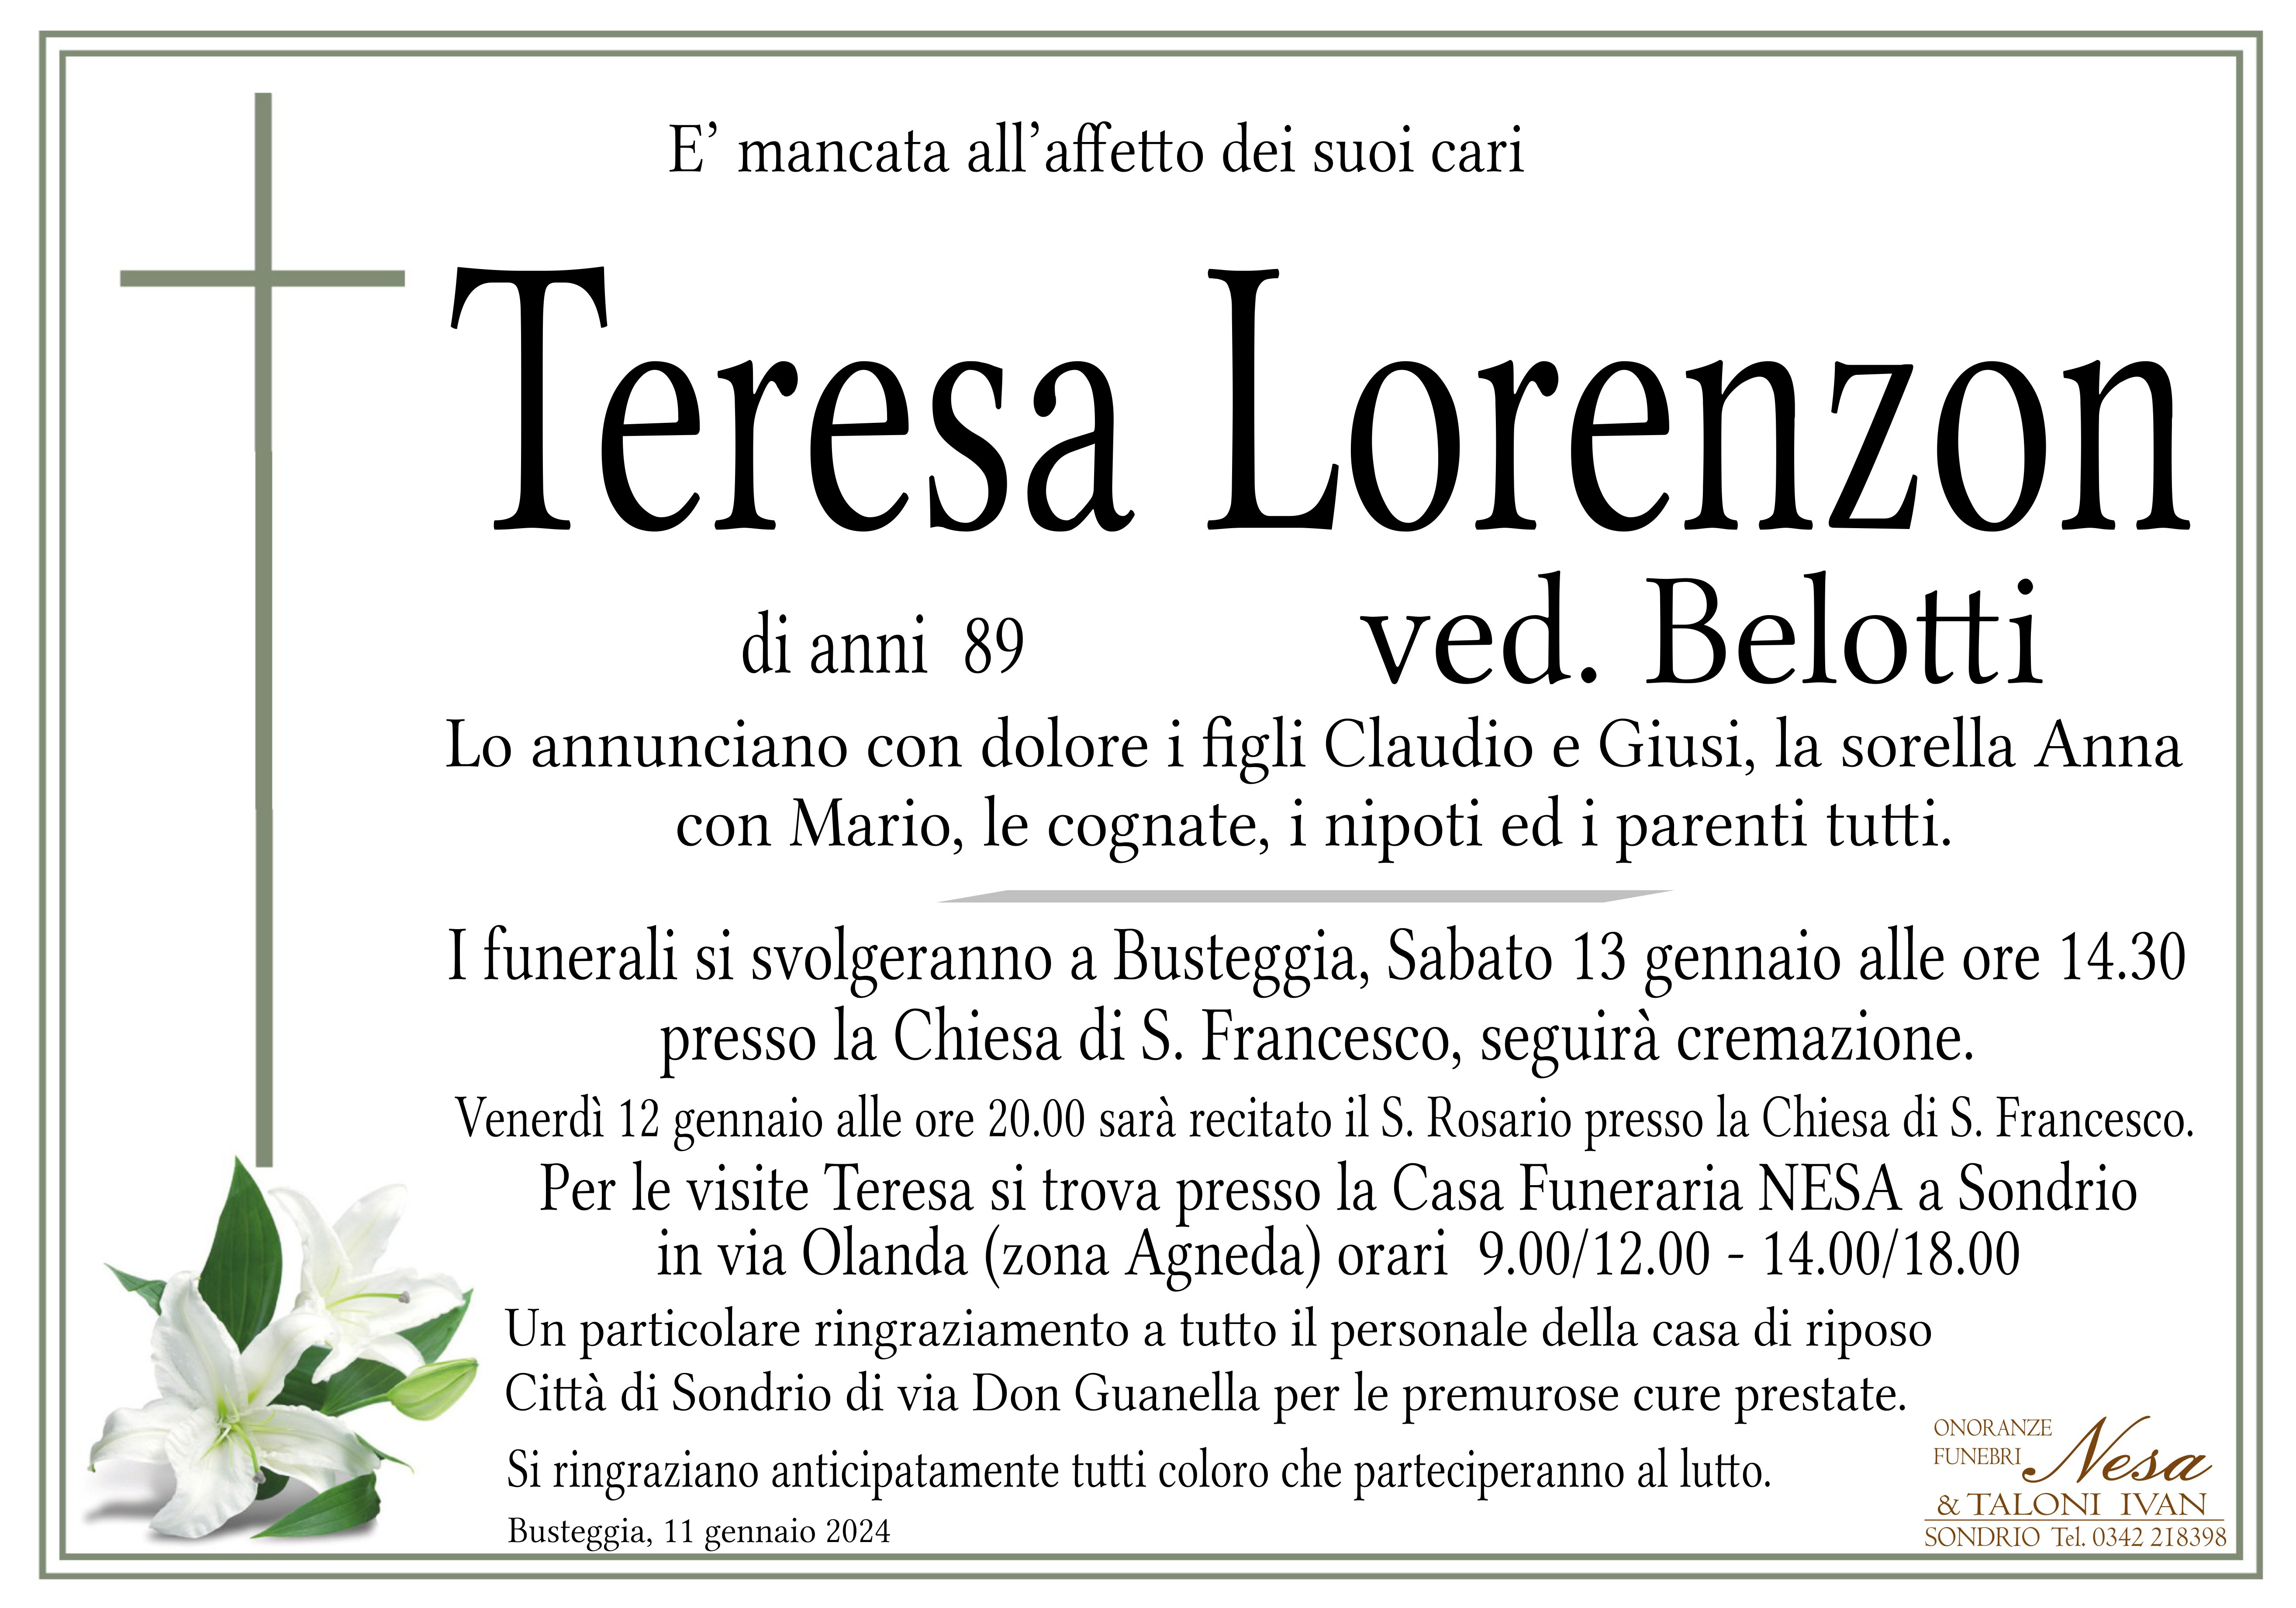 Necrologio Teresa Lorenzon ved. Belotti